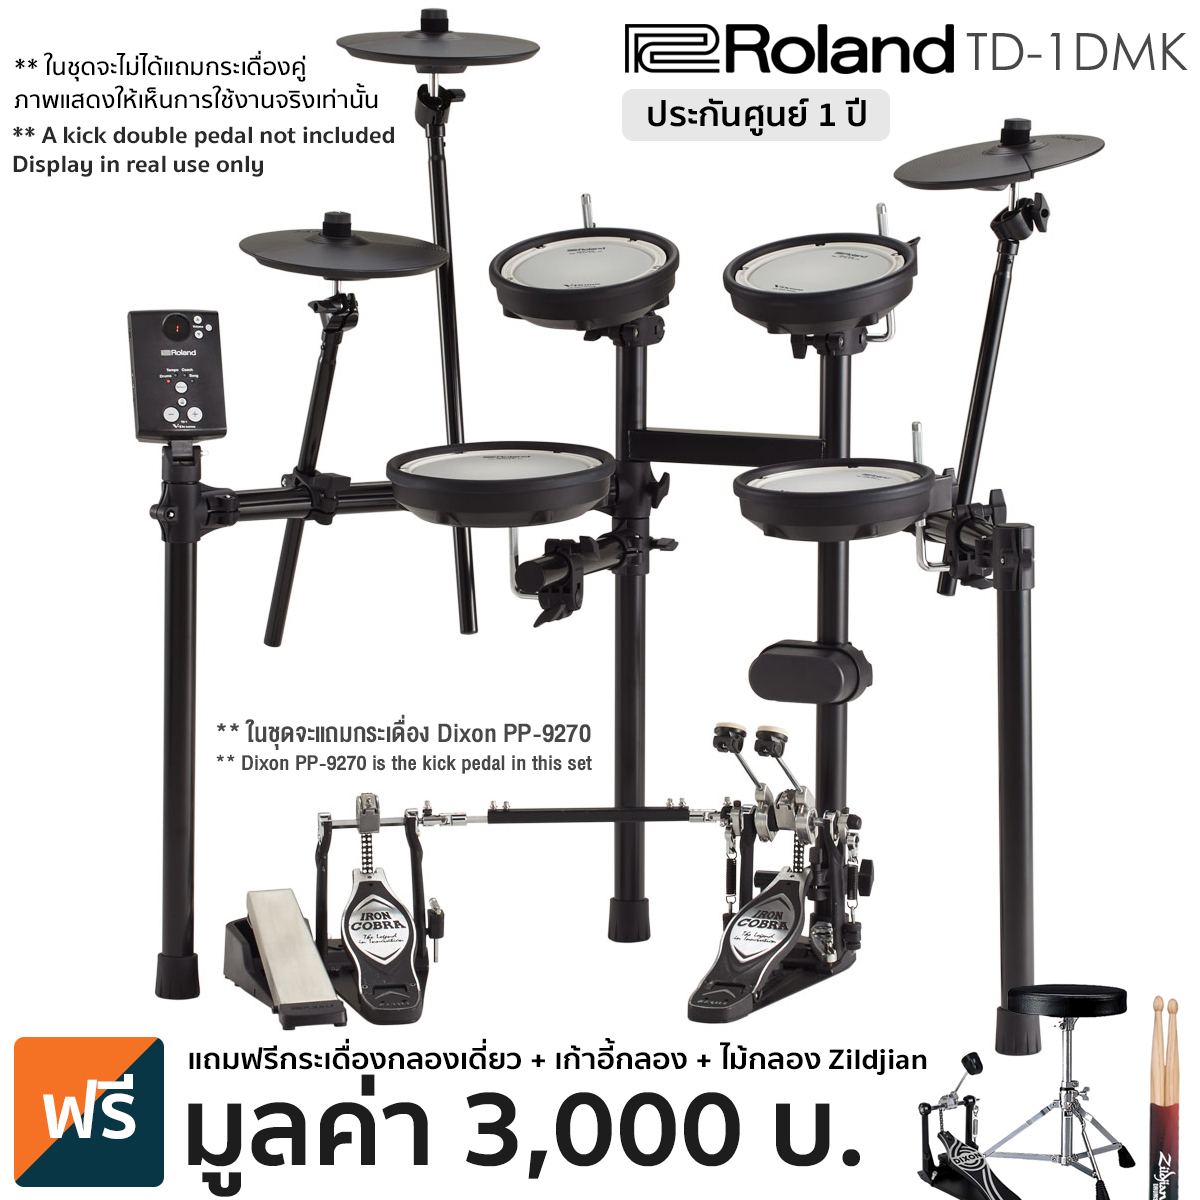 ROLAND® TD-1DMK กลองชุดไฟฟ้า แบบหนังมุ้ง 5 กลอง 3 แฉ (Electric Drum Kit) + แถมฟรีกระเดื่องเดี่ยว & ไม้กลอง & เก้าอี้กลอง & คู่มือ ** ประกันศูนย์ 1 ปี **